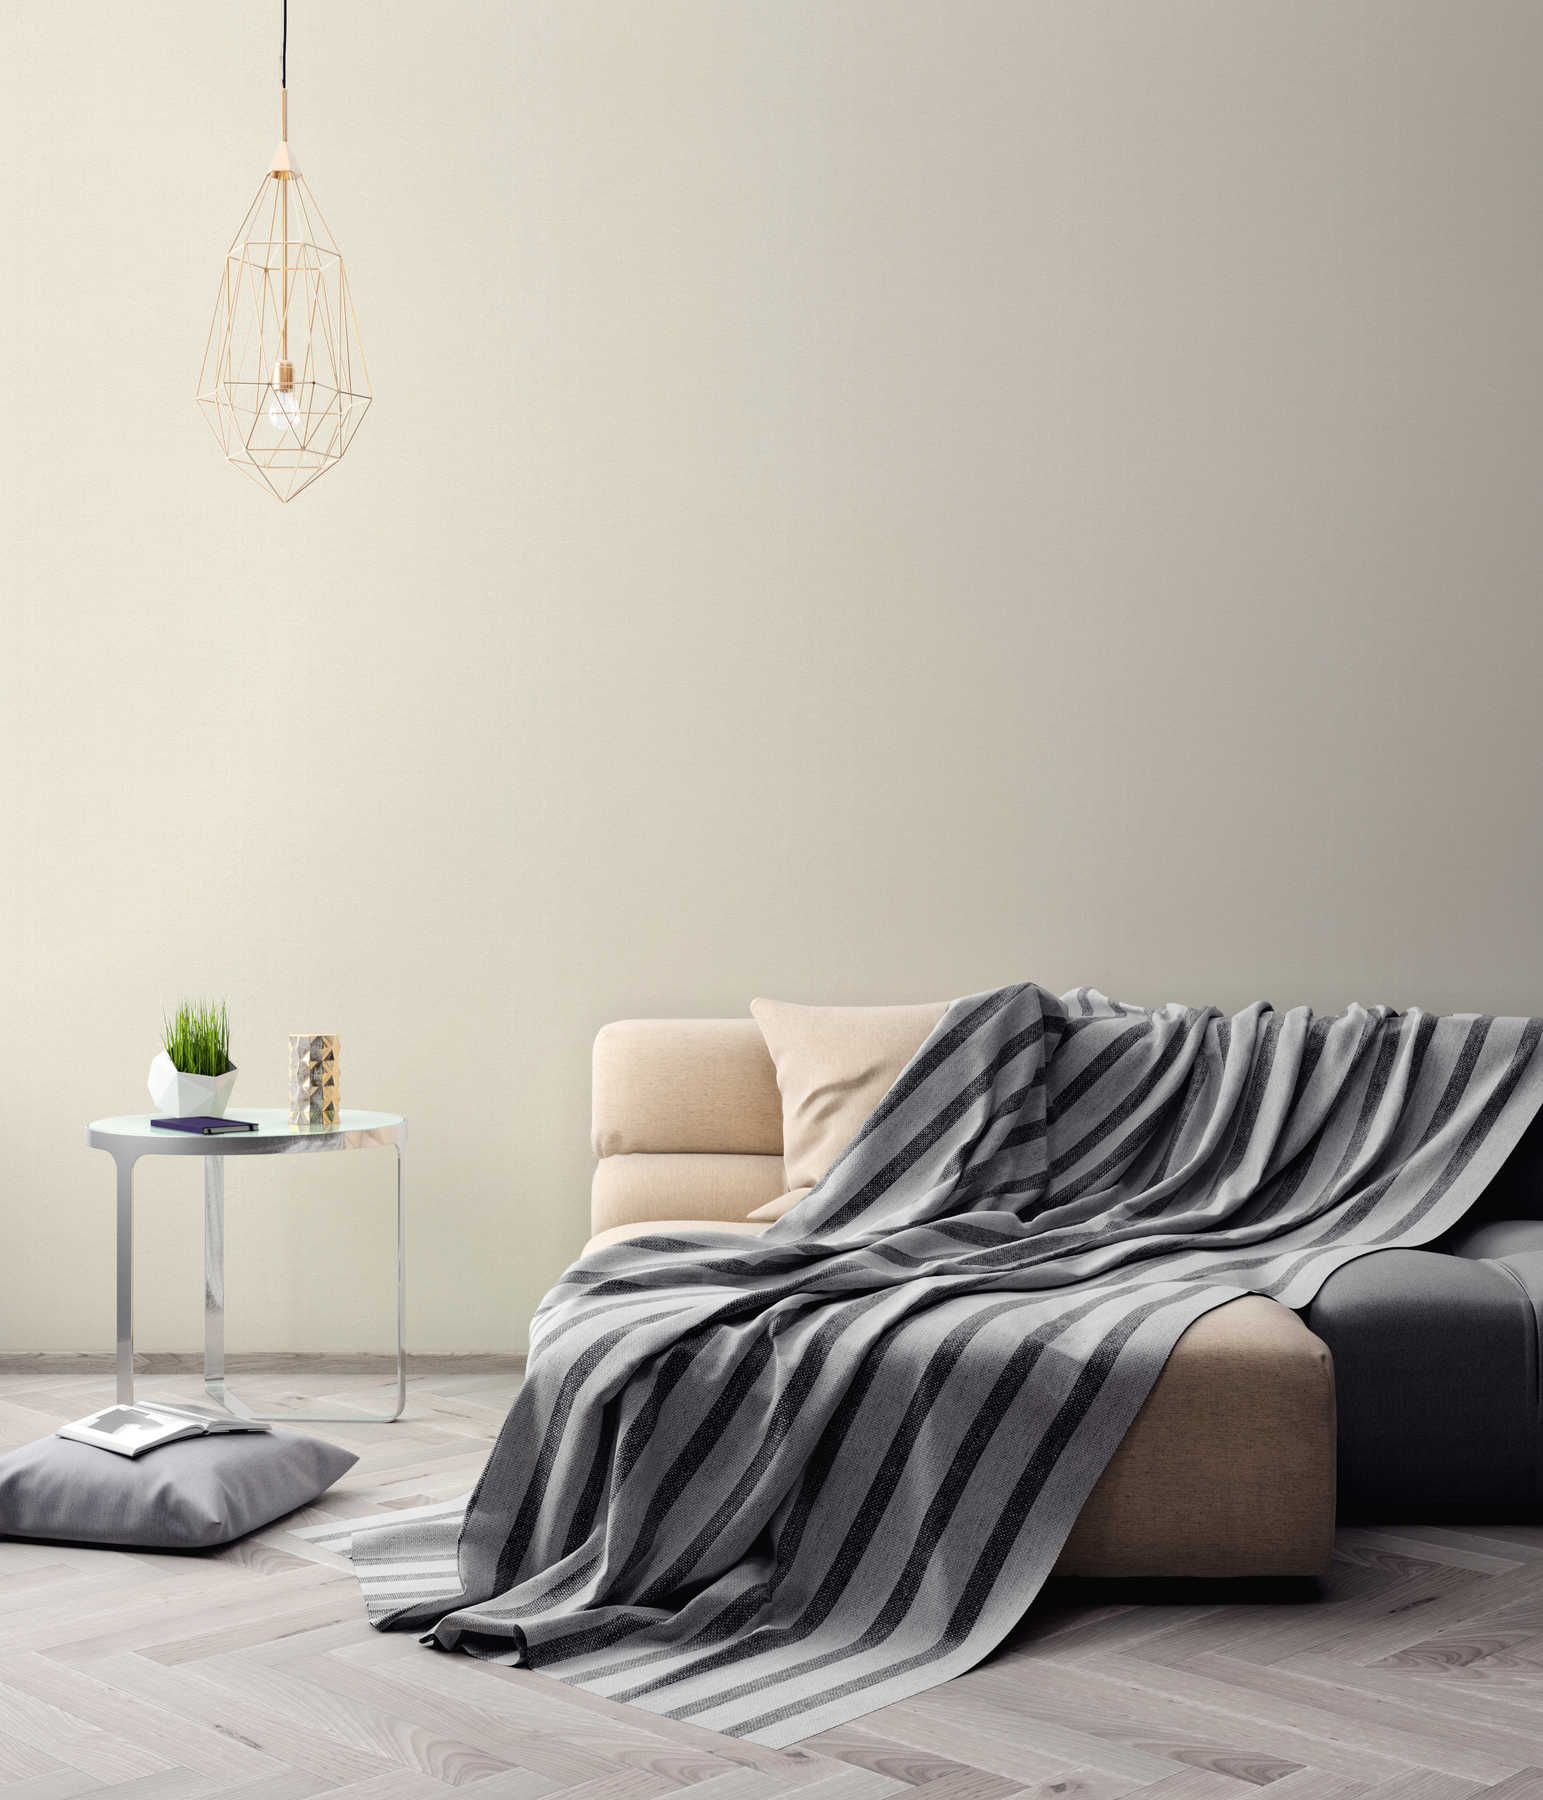             Non-woven wallpaper plain with fiber texture pattern - beige
        